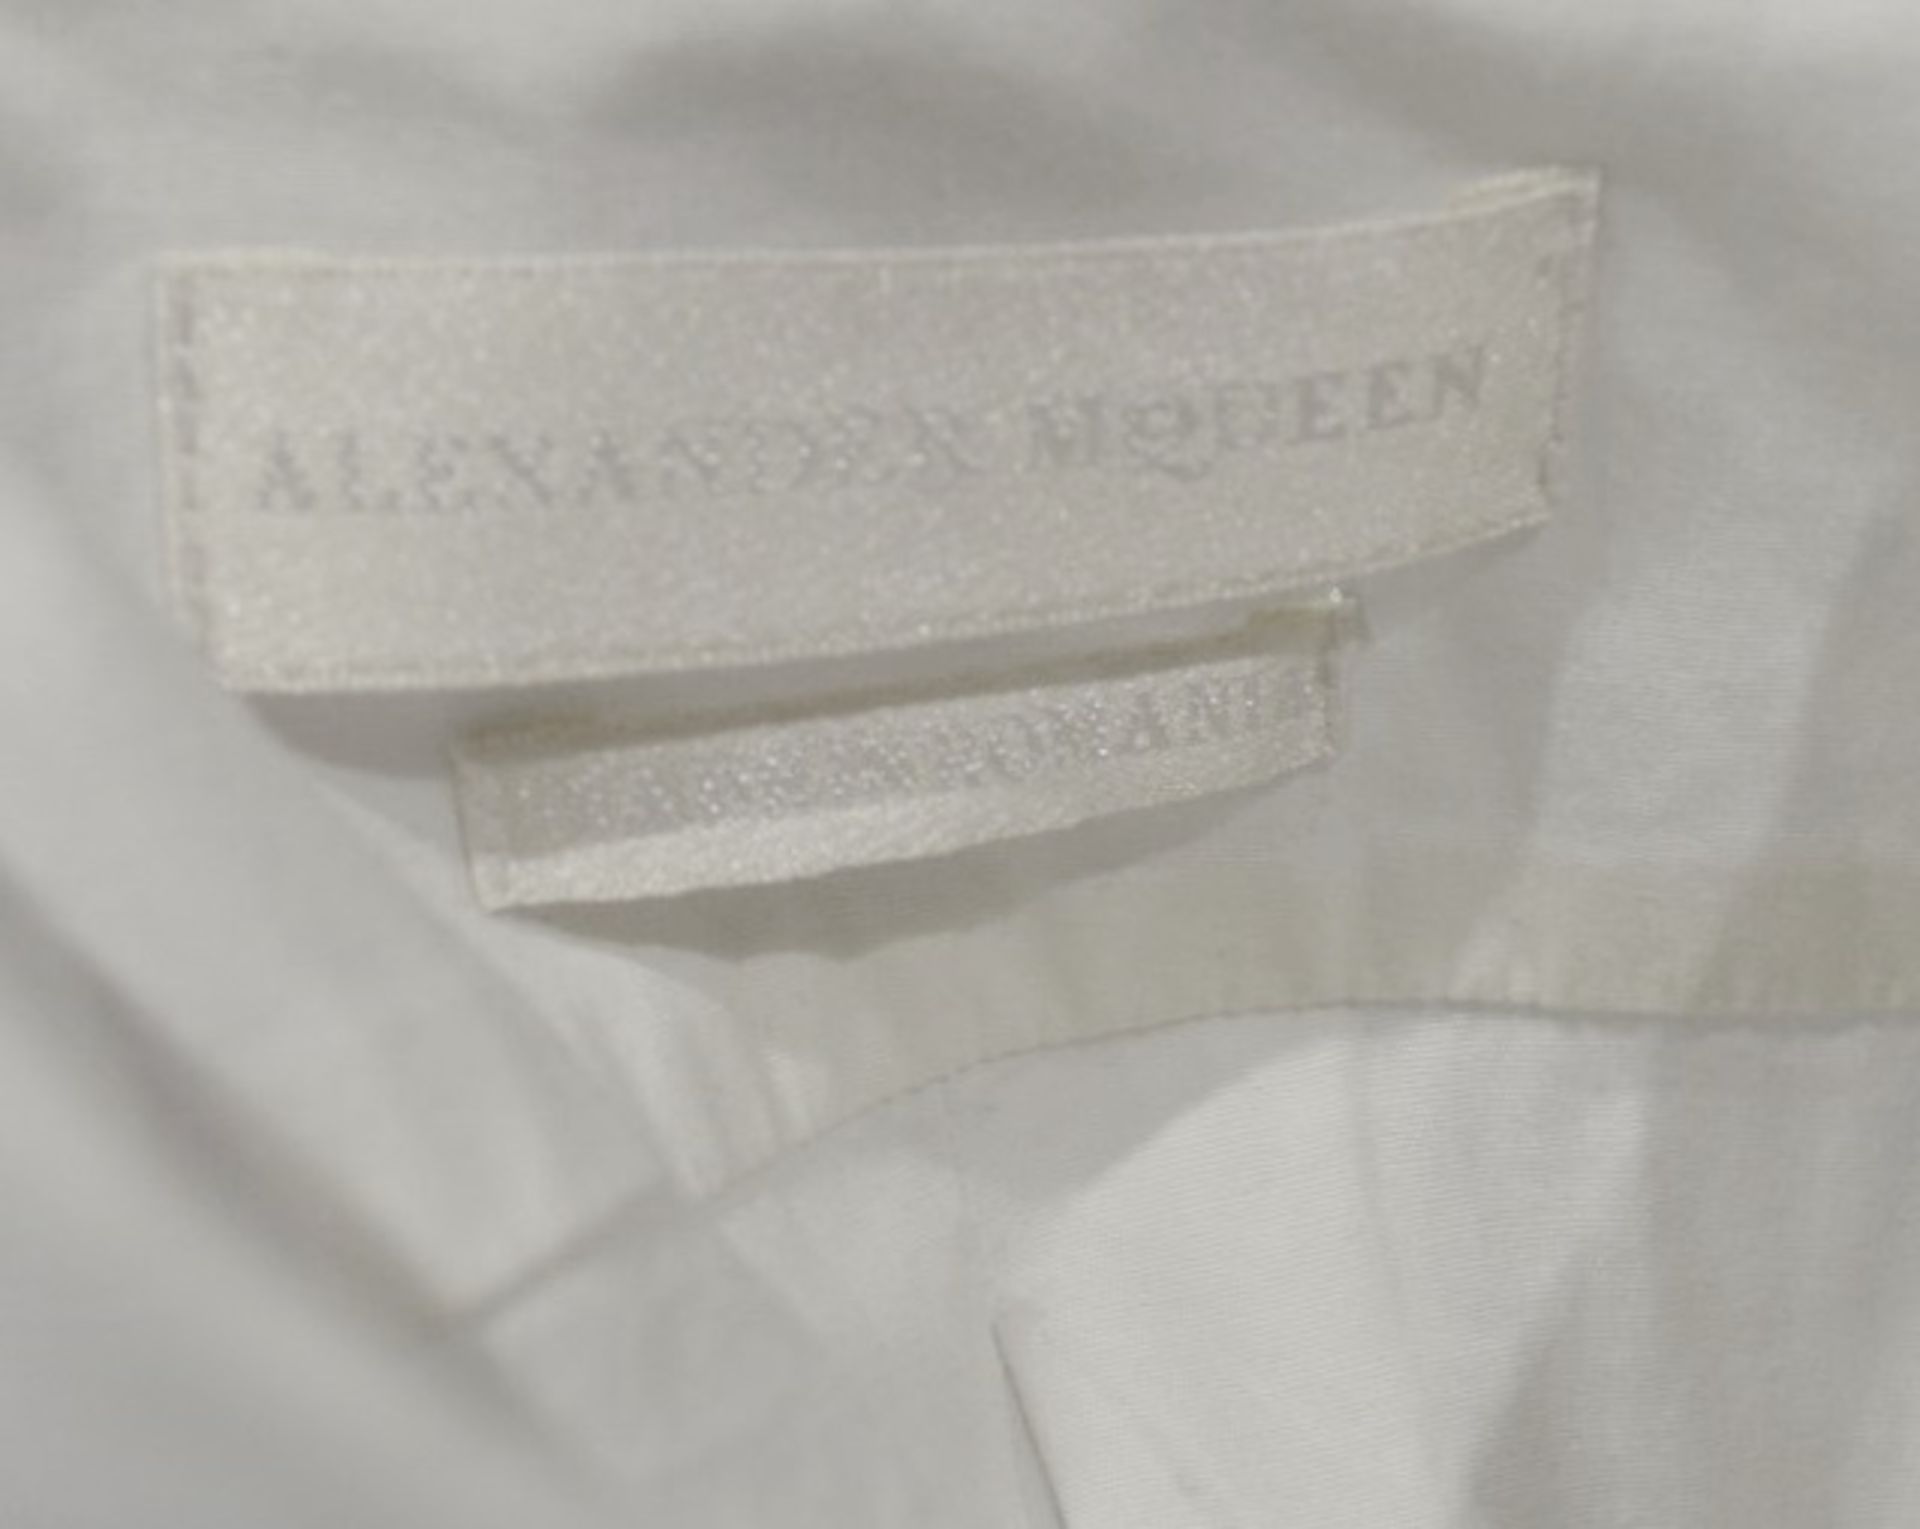 1 x Men's Genuine Alexander Mcqueen Shirt In White - Size: 46 - Original RRP £250.00 - Image 3 of 6